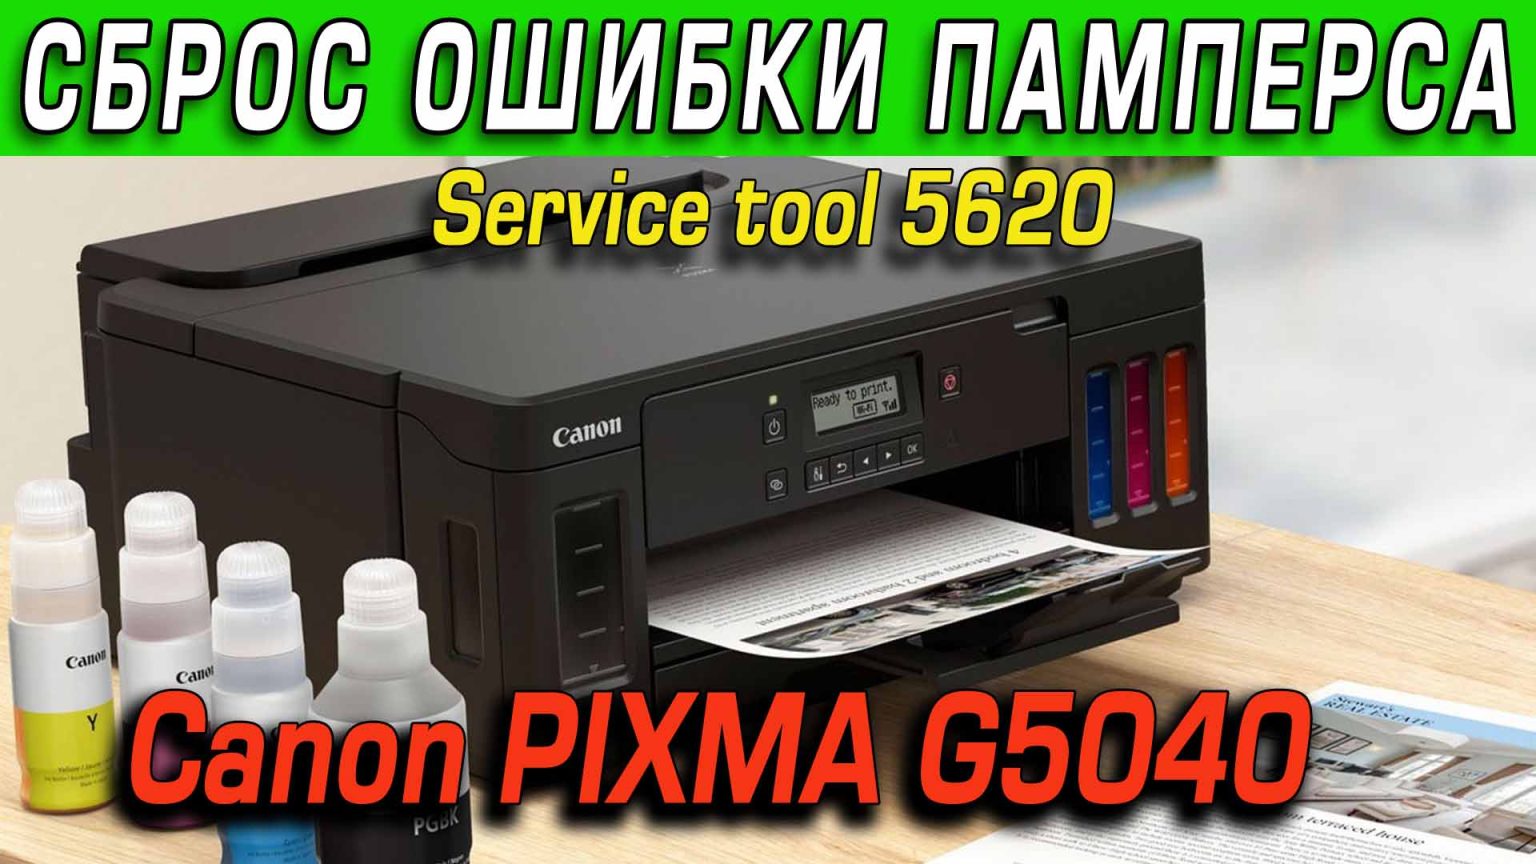 Canon PIXMA g5040. Canon g5040 картридж. Canon g5040 драйвер. Canon ts5040 ошибка 6004.